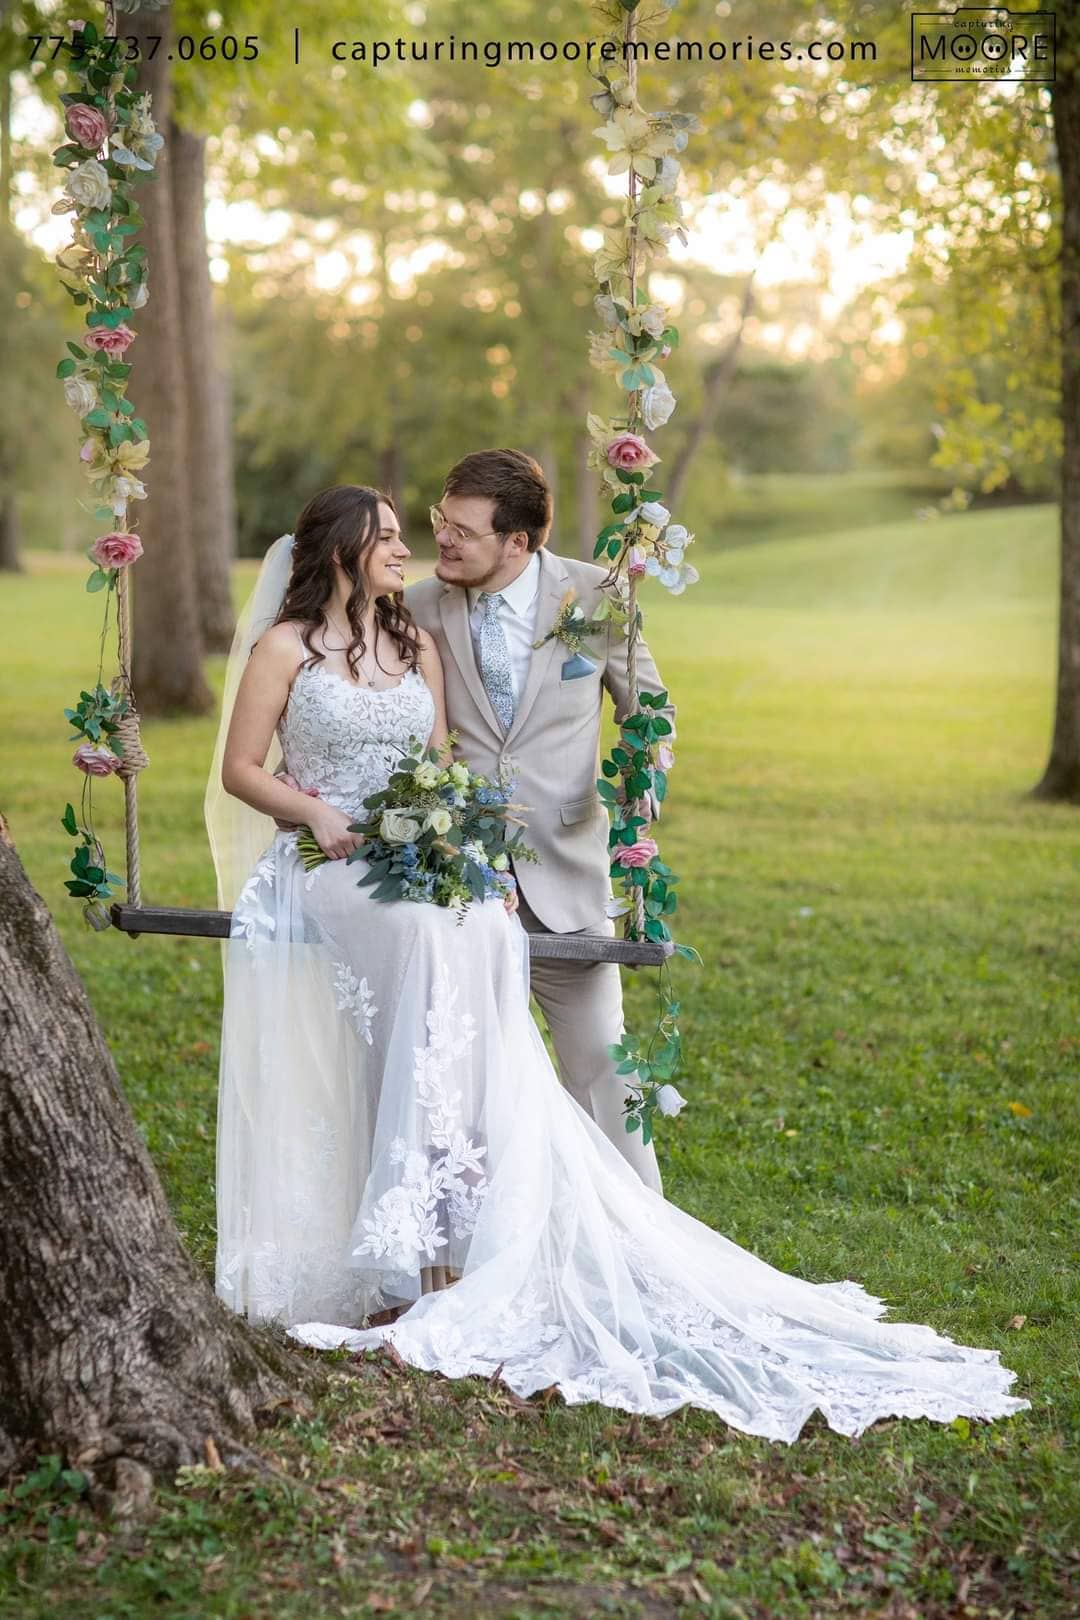 Kennedy Estates - Lizton Indiana Wedding photographer -  Couple outside on swing in wedding dress and suit 